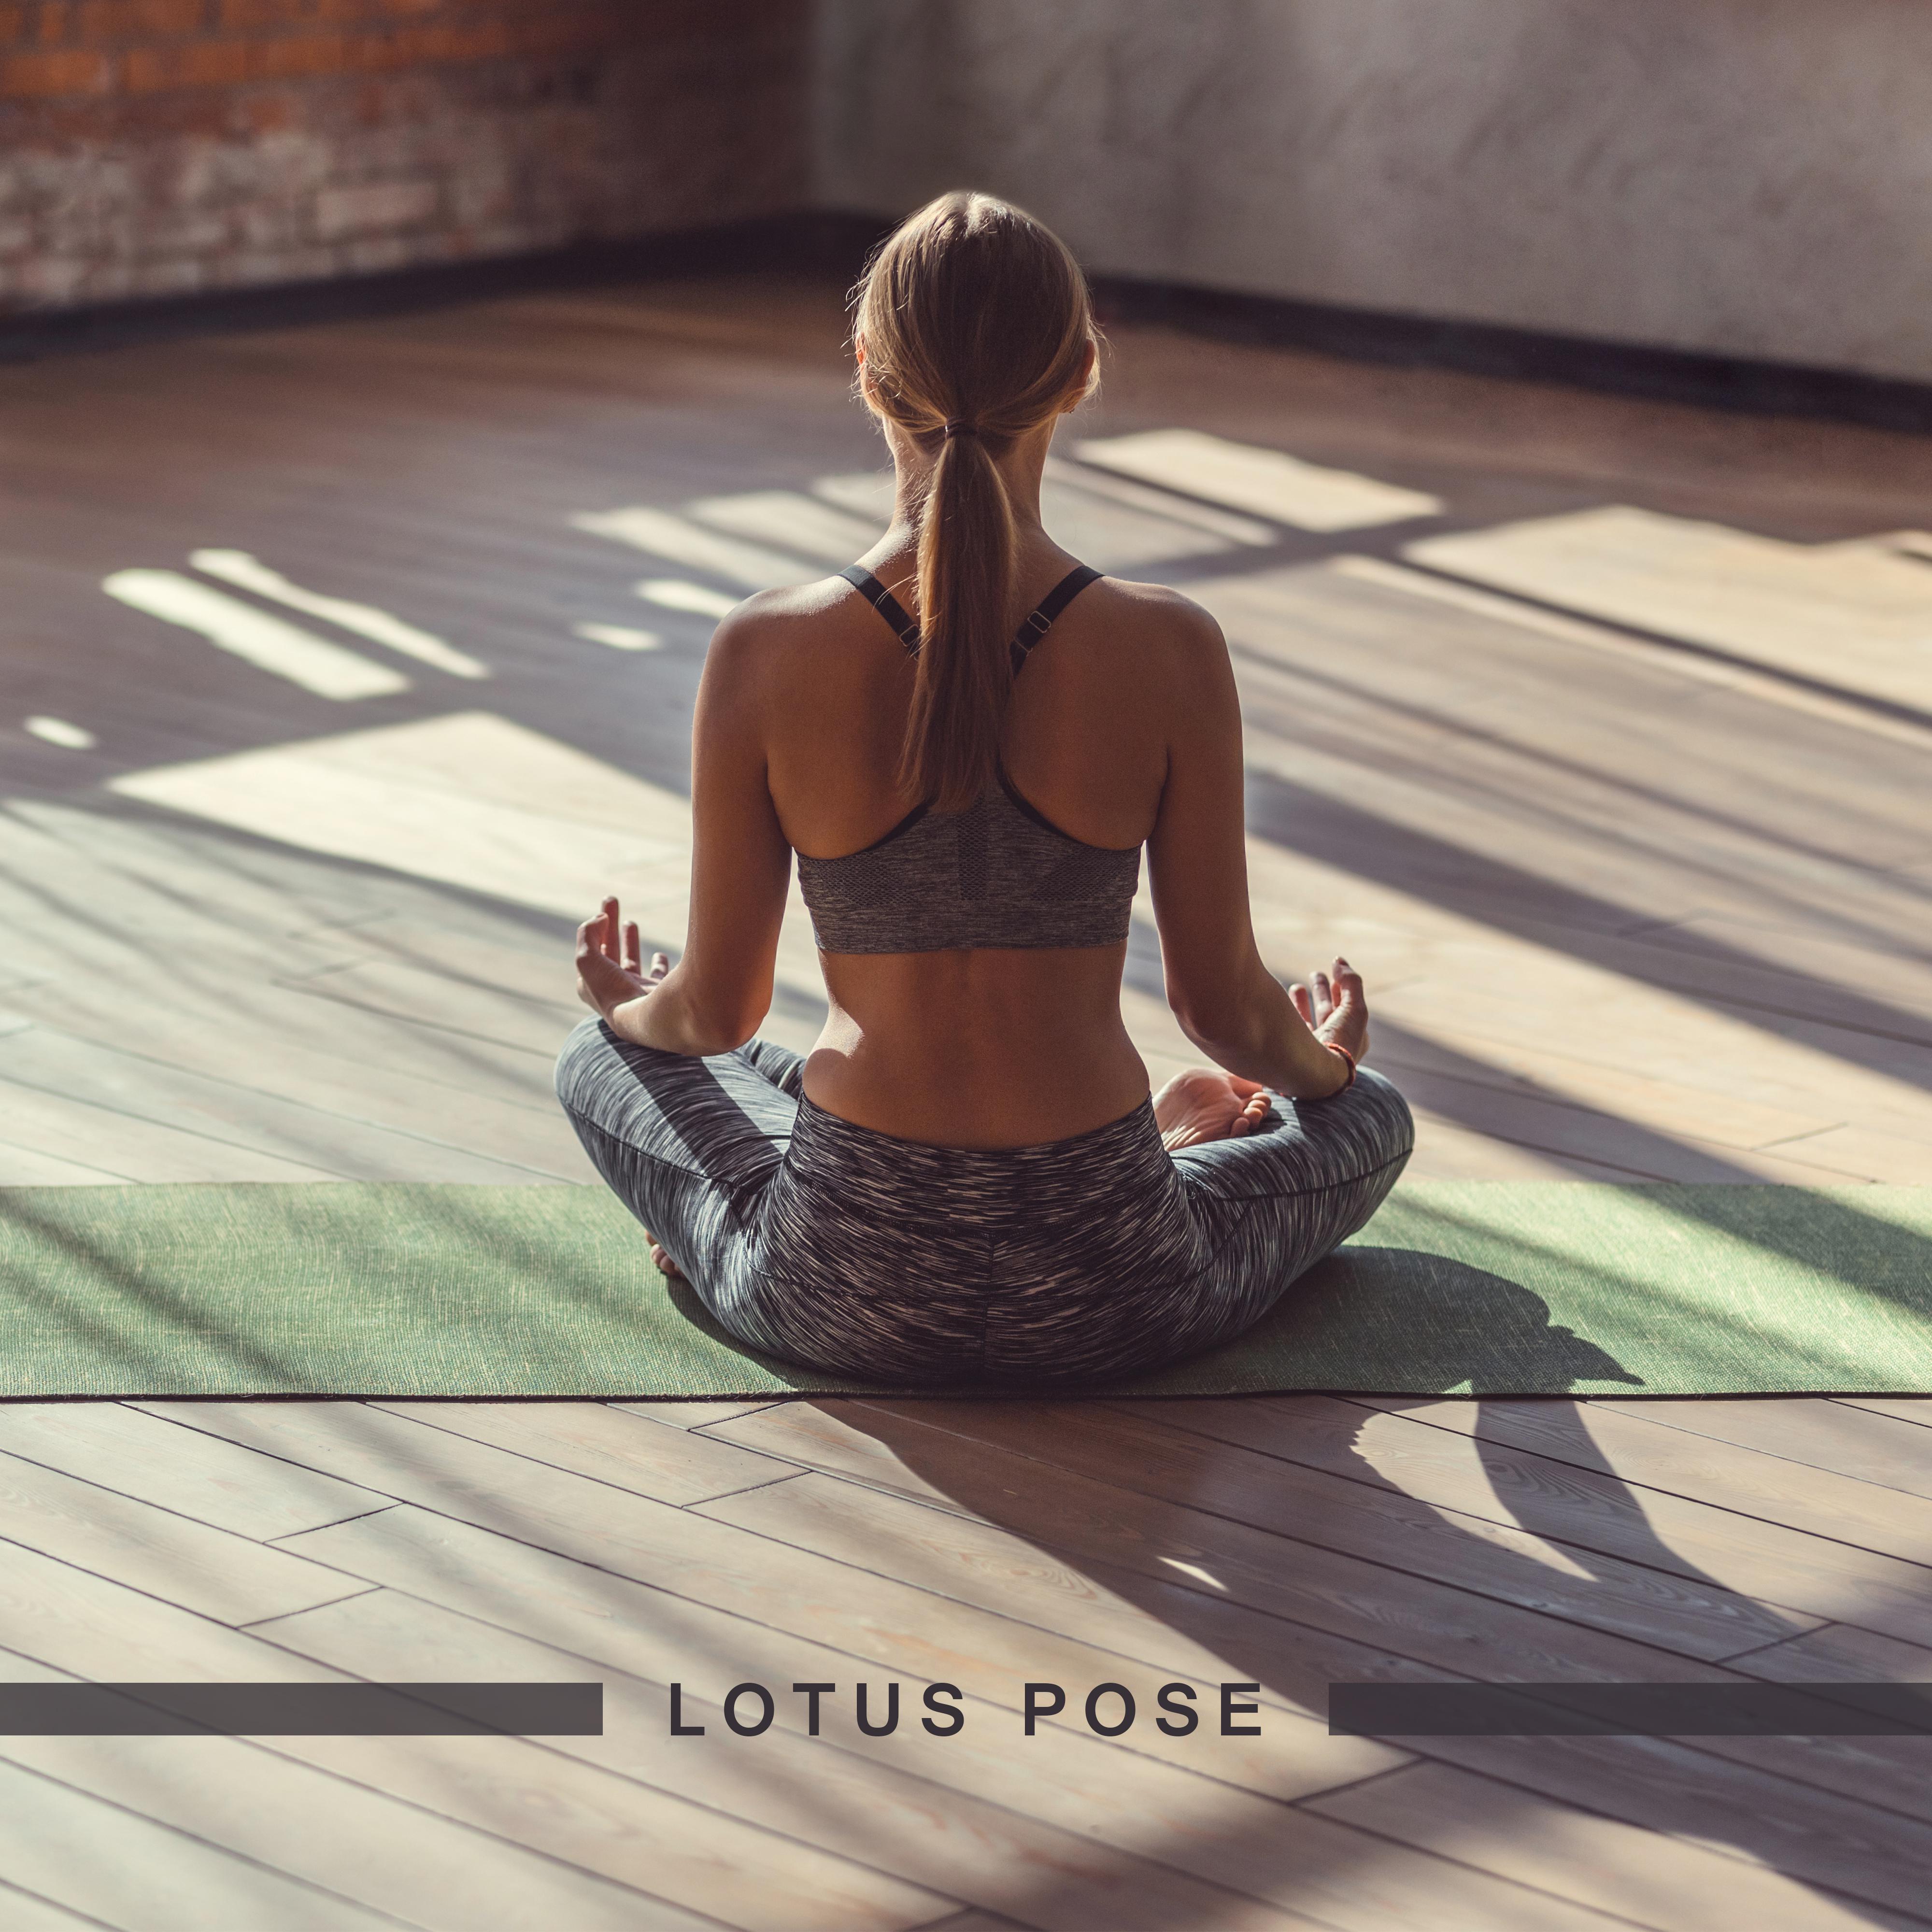 Lotus Pose  Meditation Music for Yoga, Yoga Pose and Practice